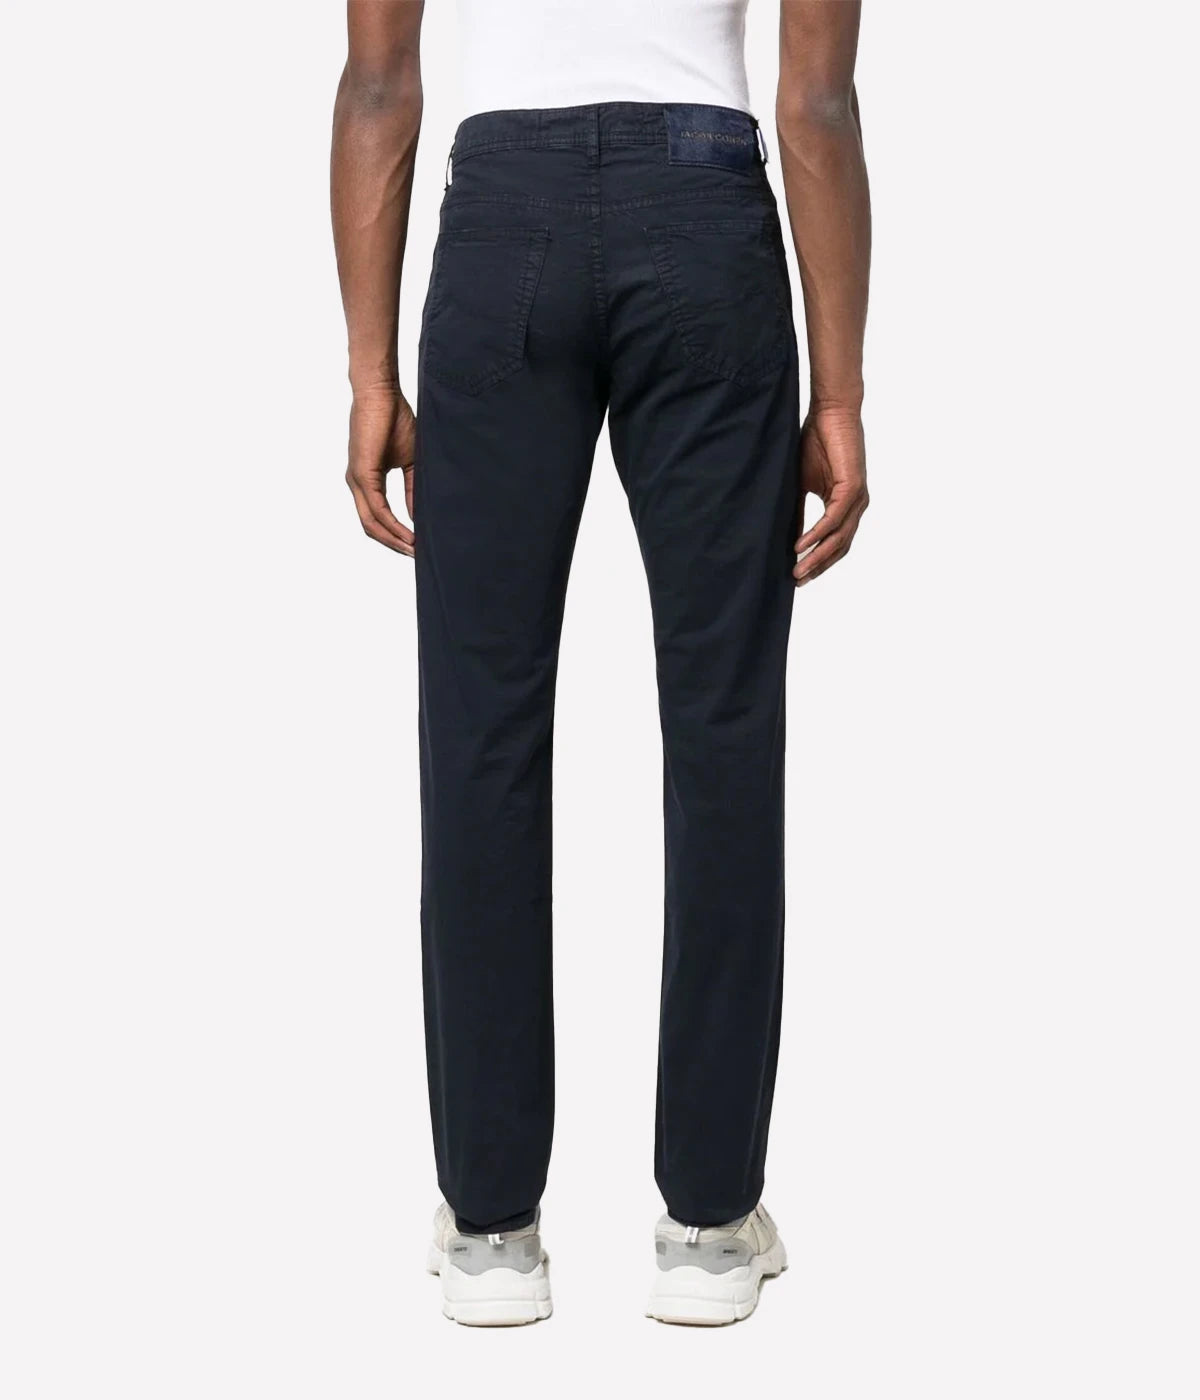 Bard 5 Pocket Slim Fit Jean in Navy Blue